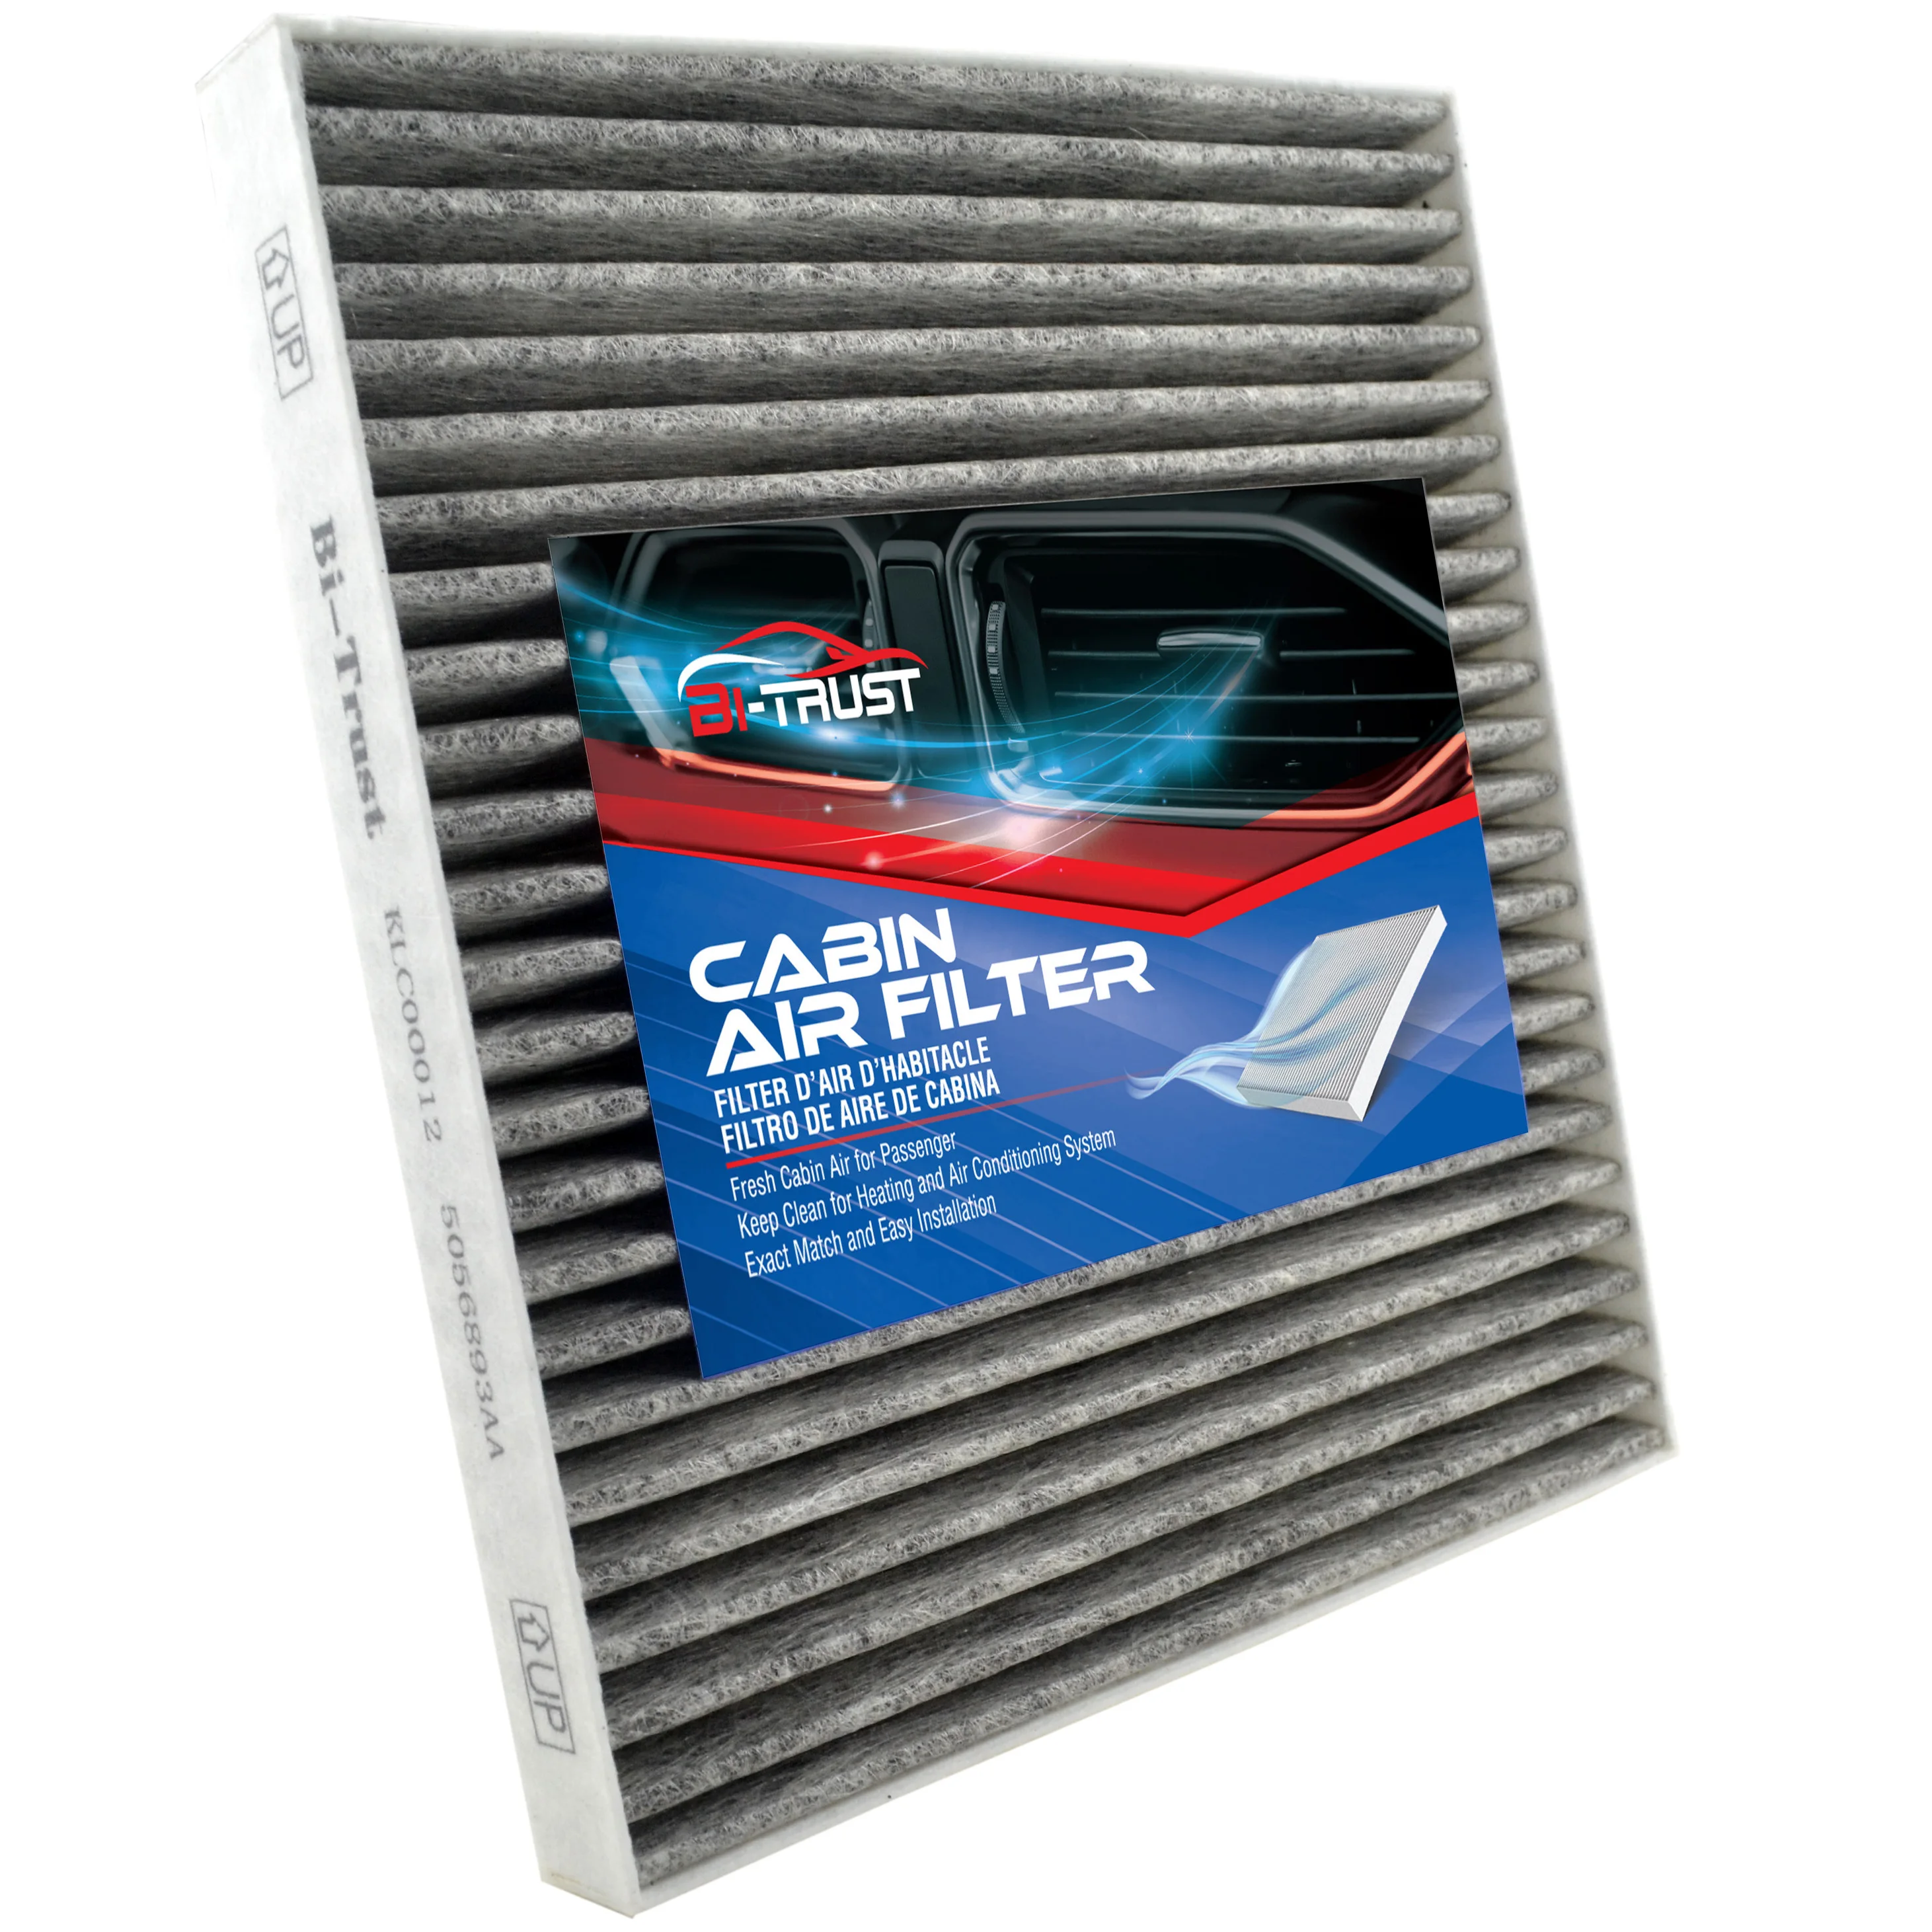 

Bi-Trust Carbon Cabin Air Filter for Chrysler 200 Cirrus Sebring Dodge Avenger Caliber Journey Jeep Compass Patriot